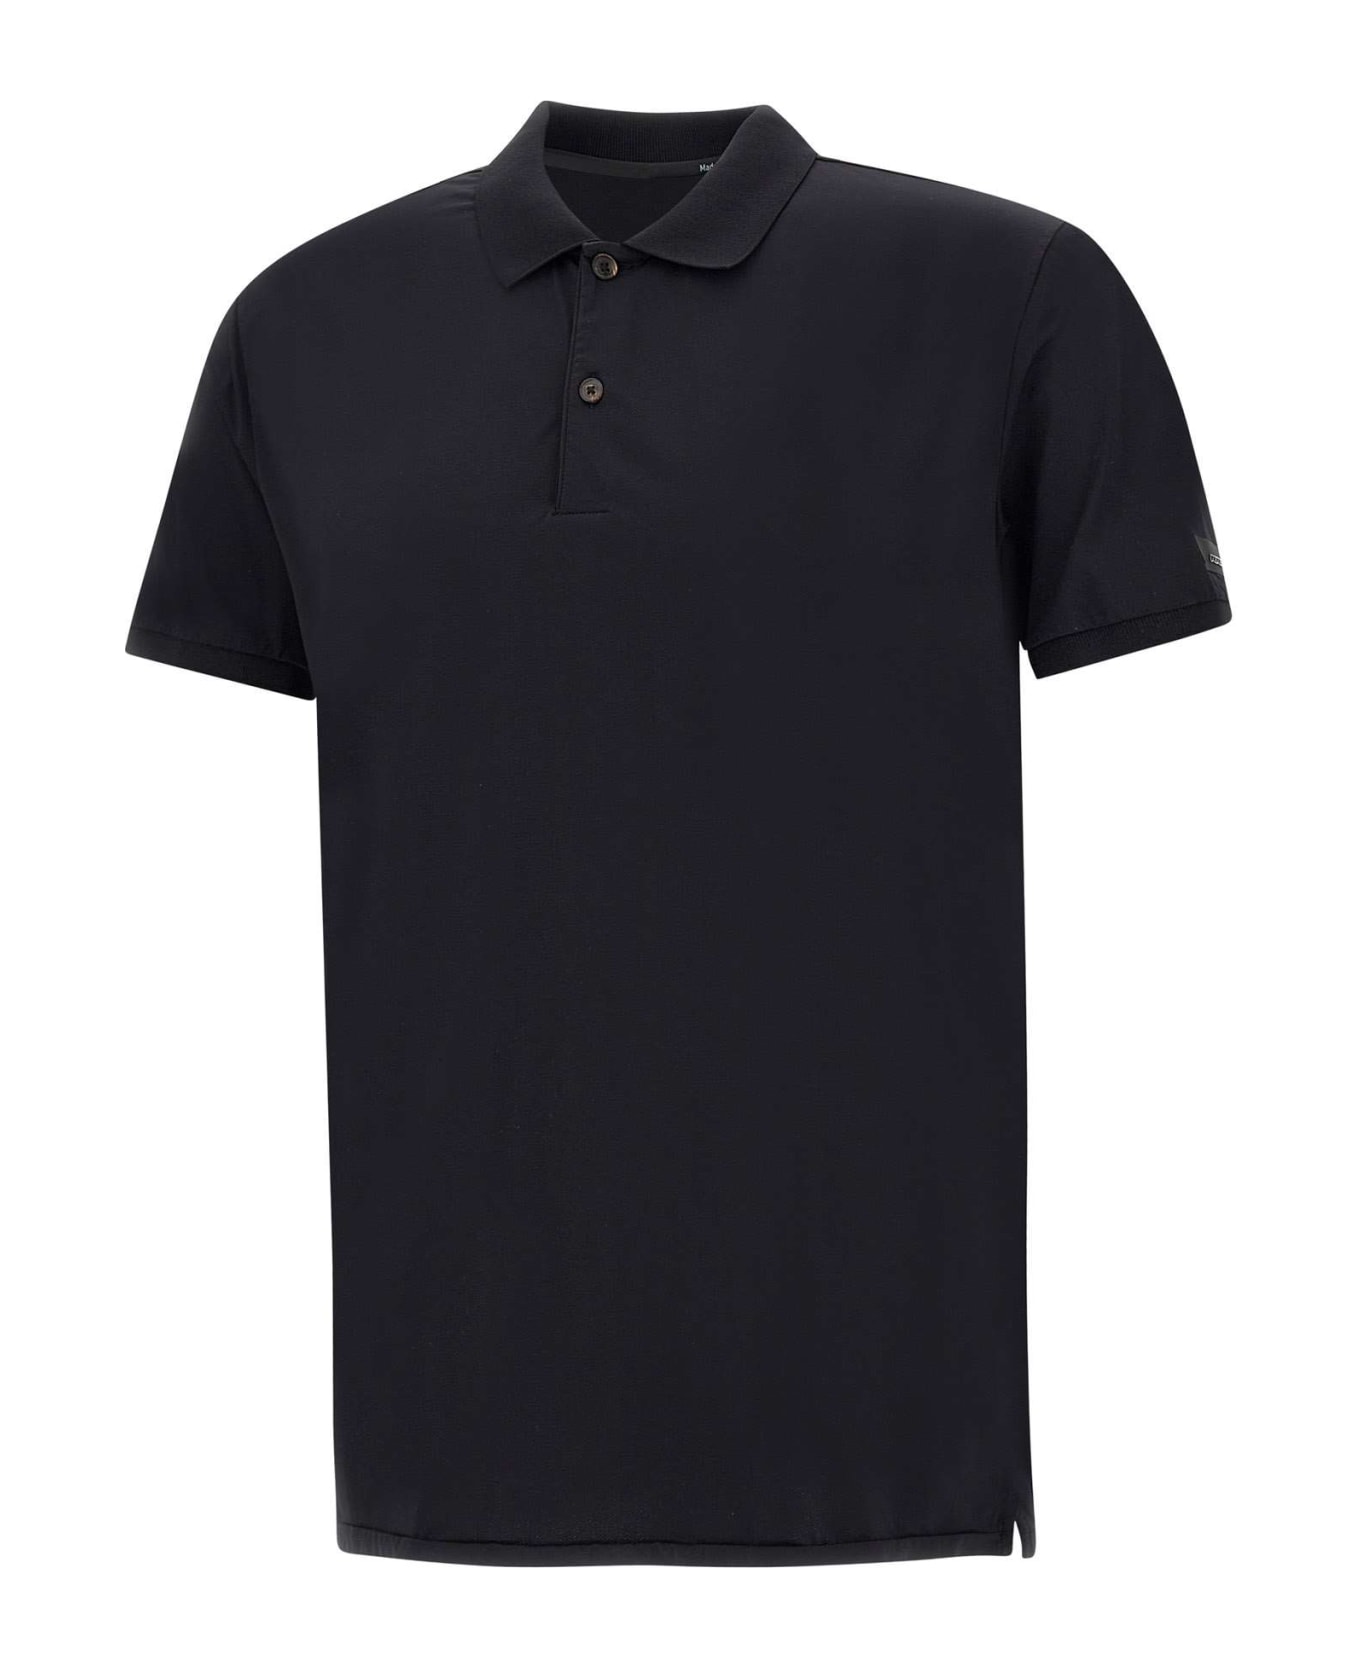 RRD - Roberto Ricci Design "gdy" Oxford Polo Shirt - BLACK